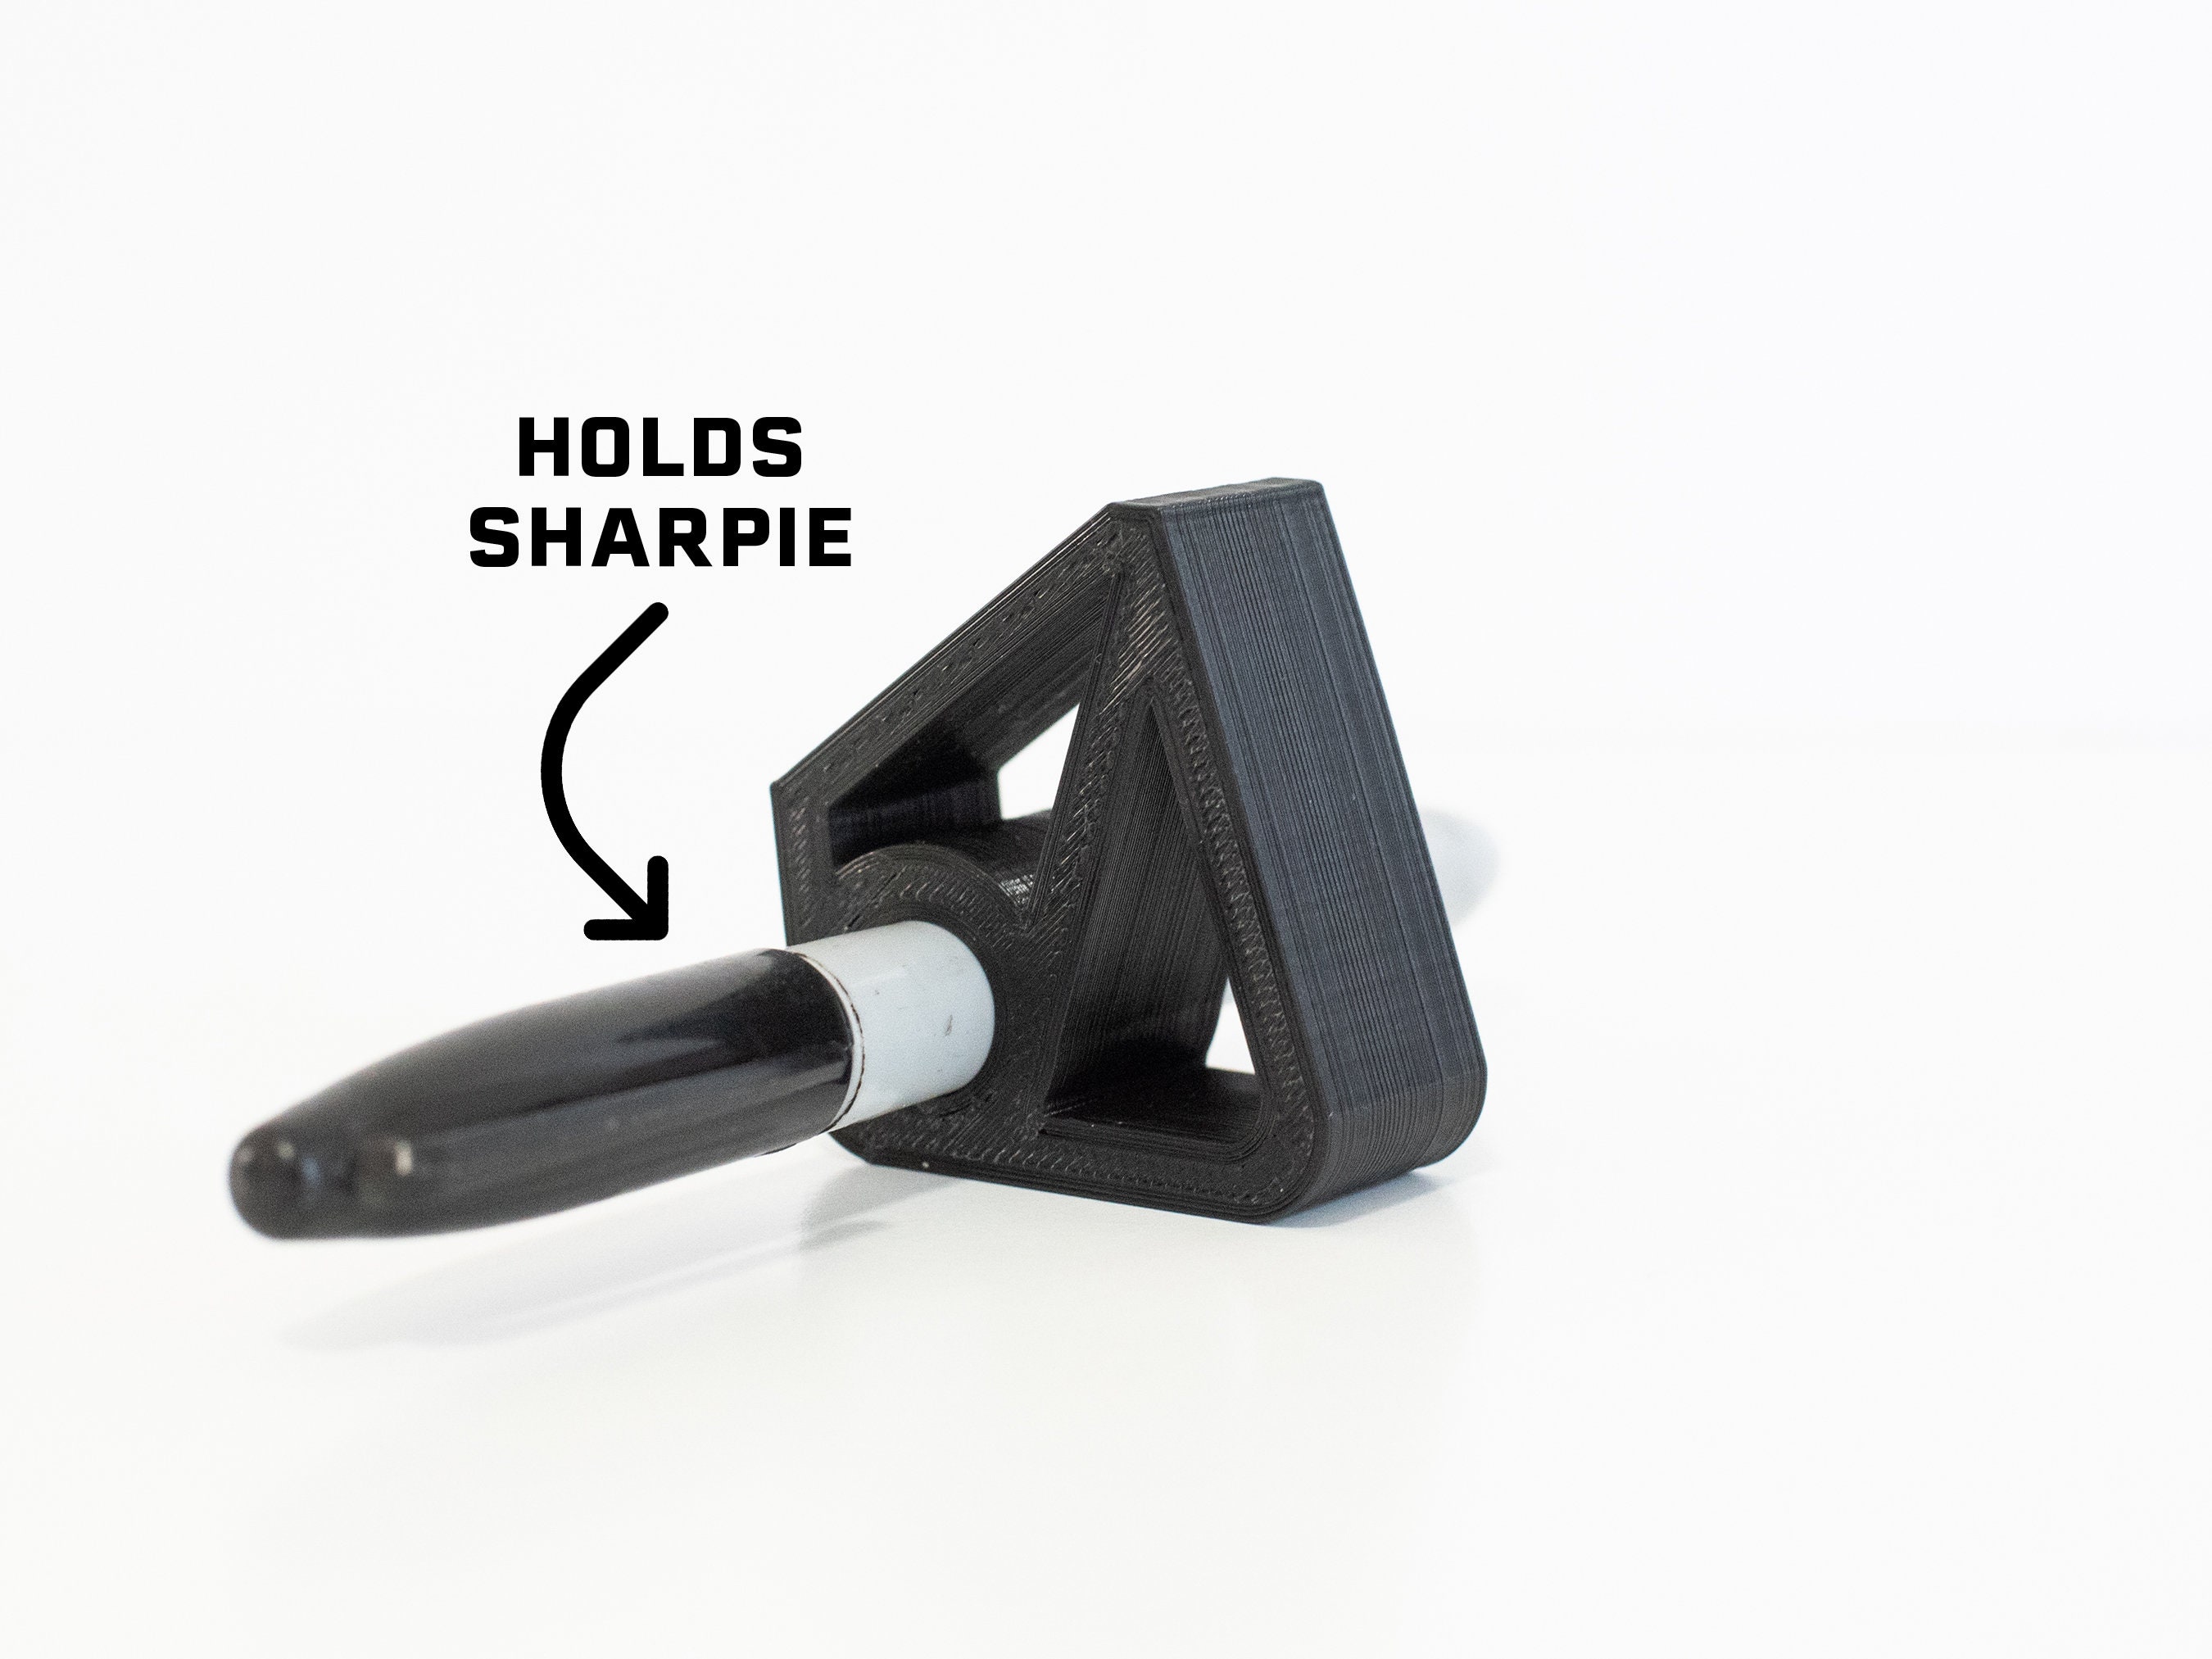 NSD -- Work Sharp Precision Adjust : r/sharpening